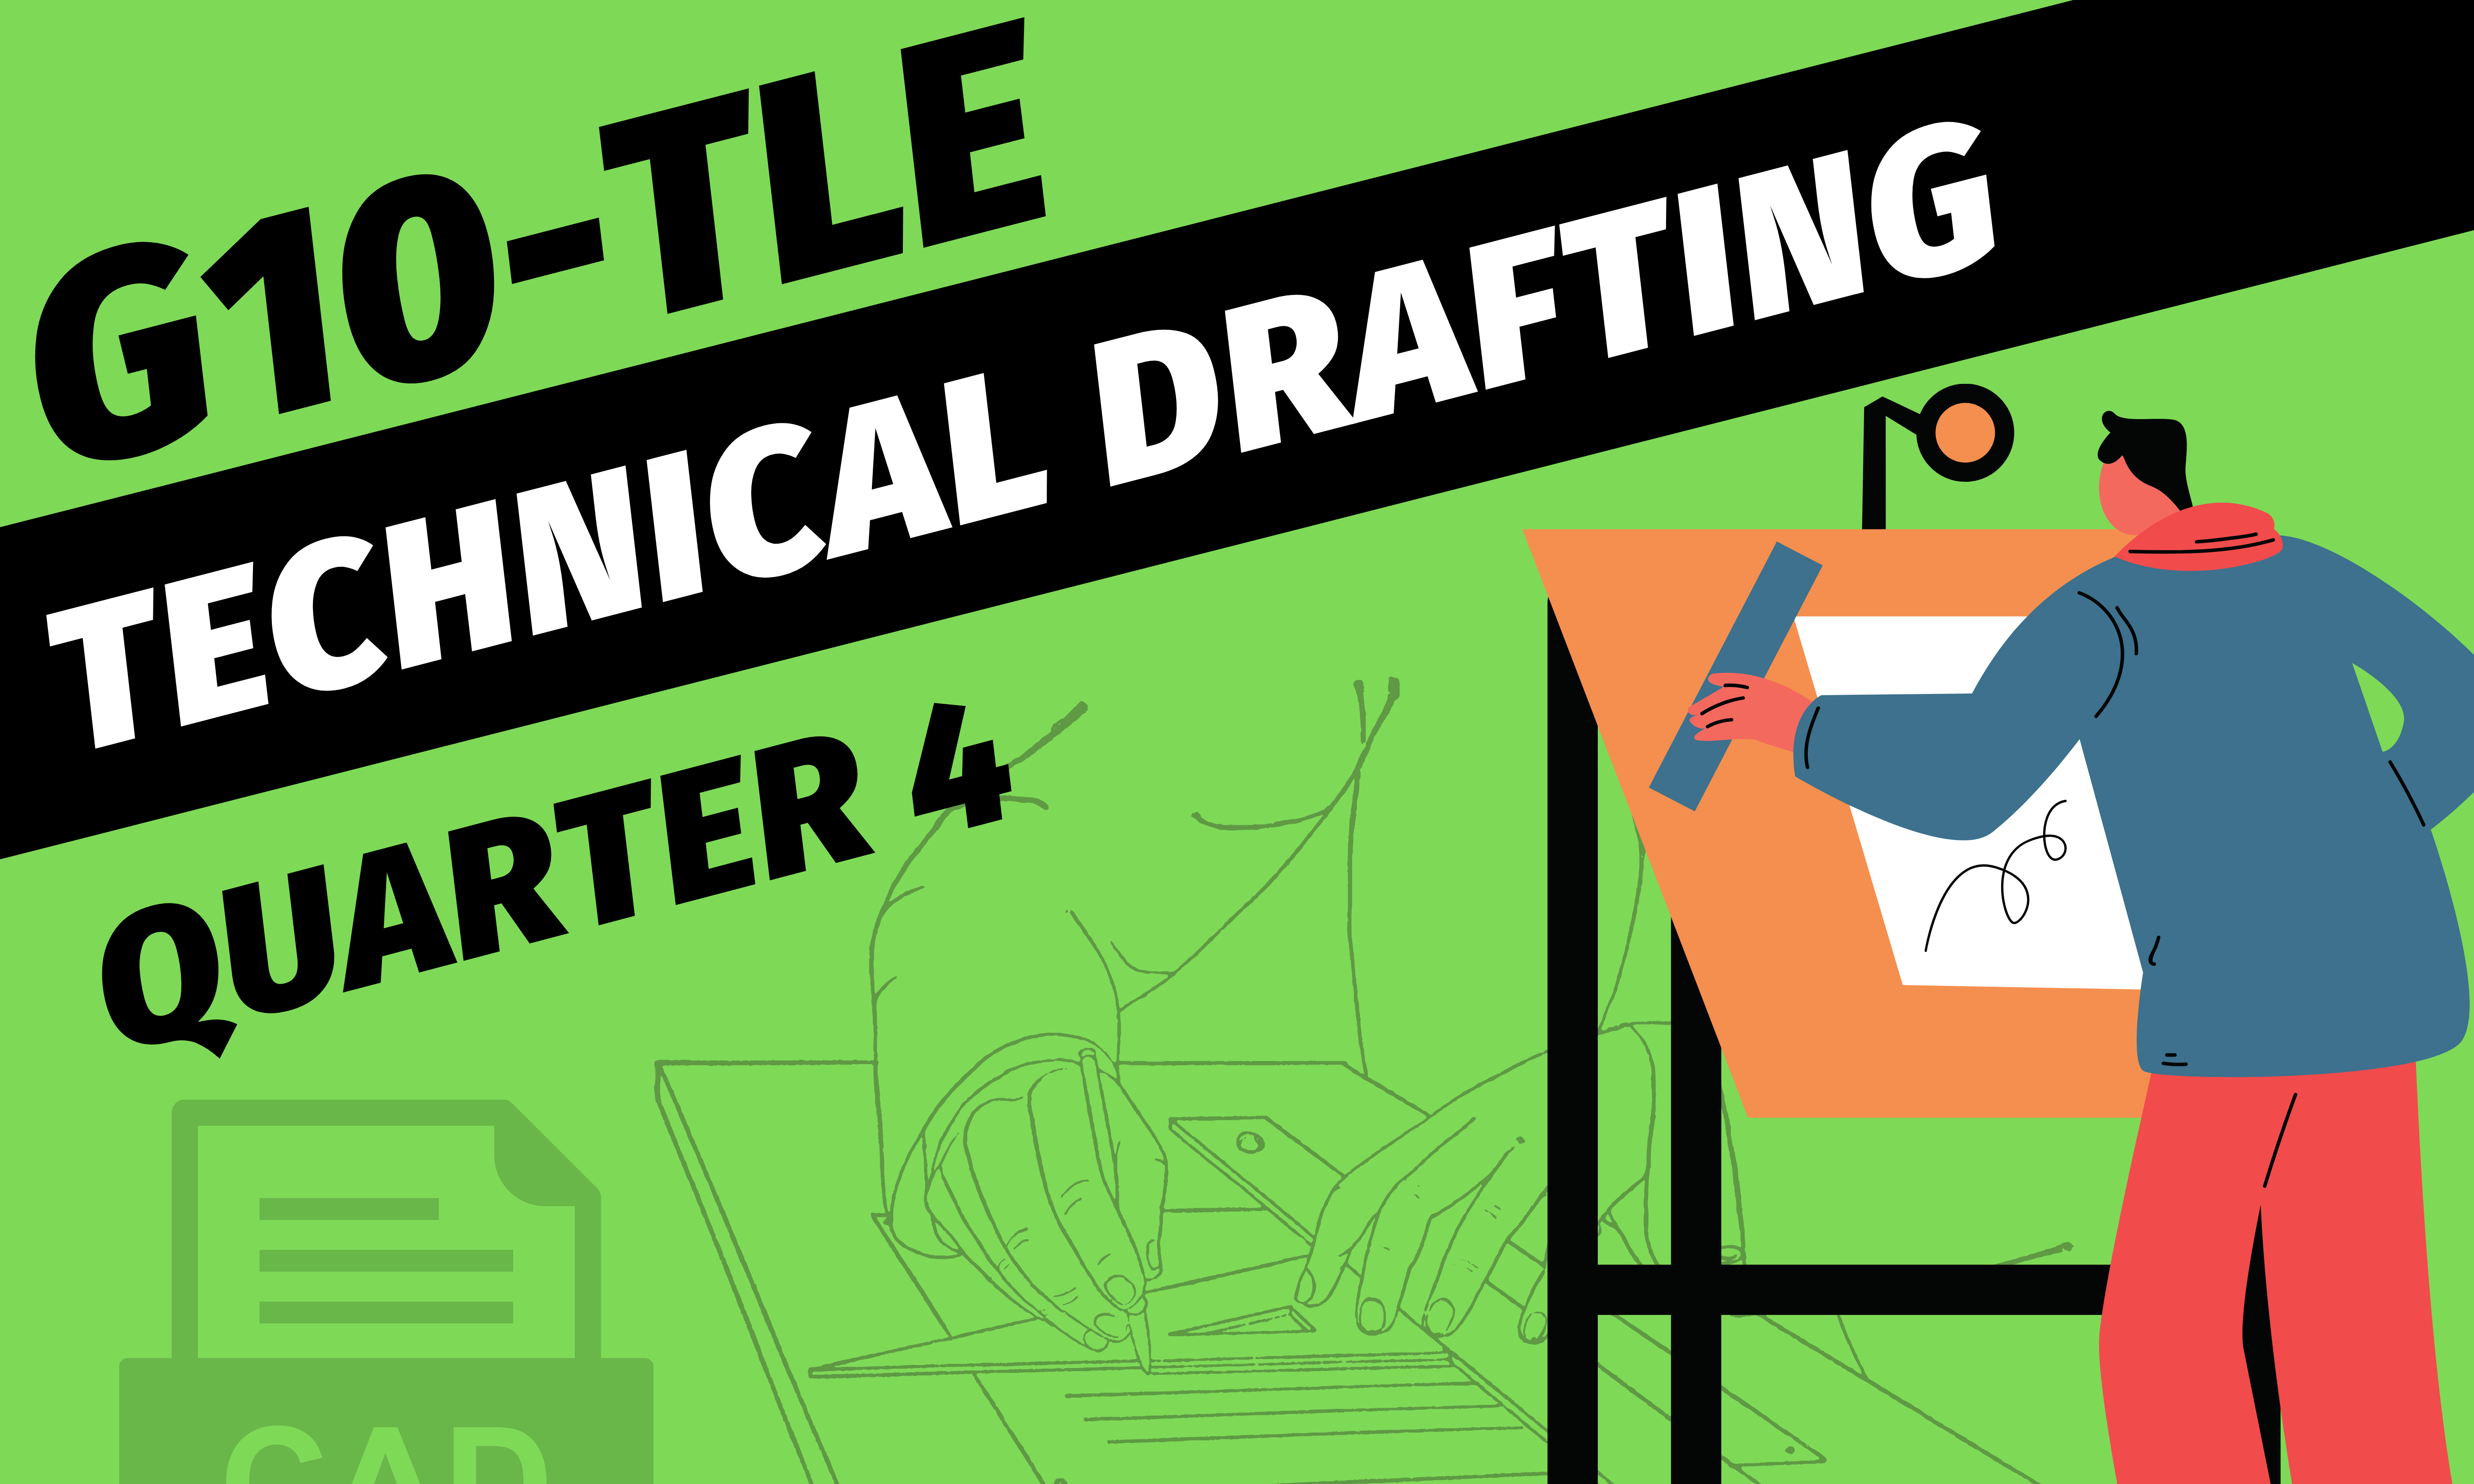 G10-TLE-Technical Drafting-Quarter 4 